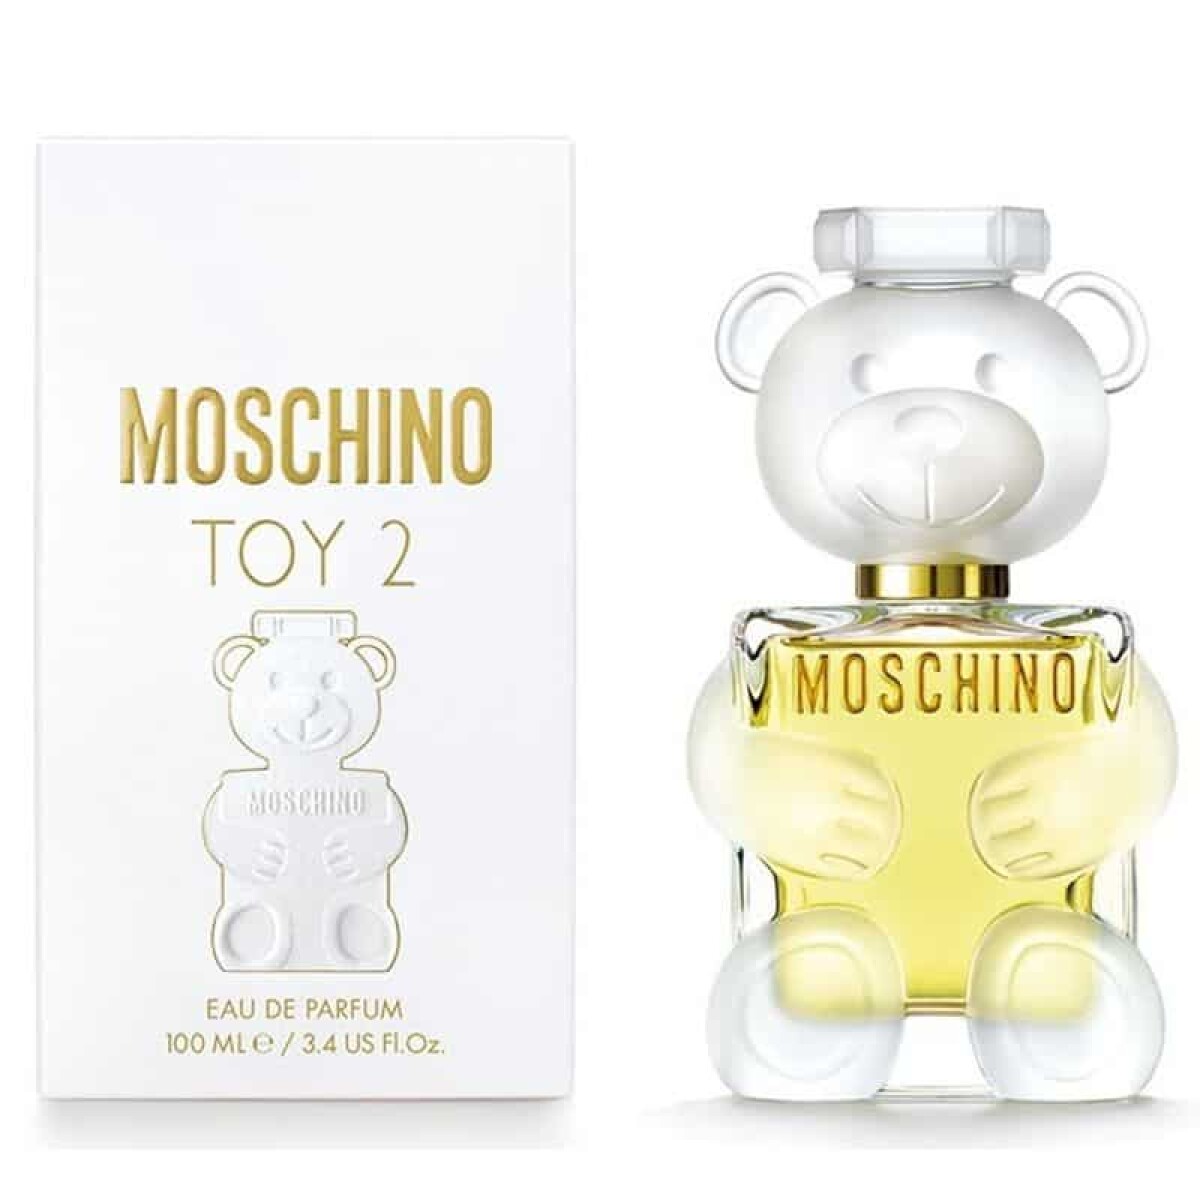 Perfume Moschino Toy 2 Edp 100 ml 